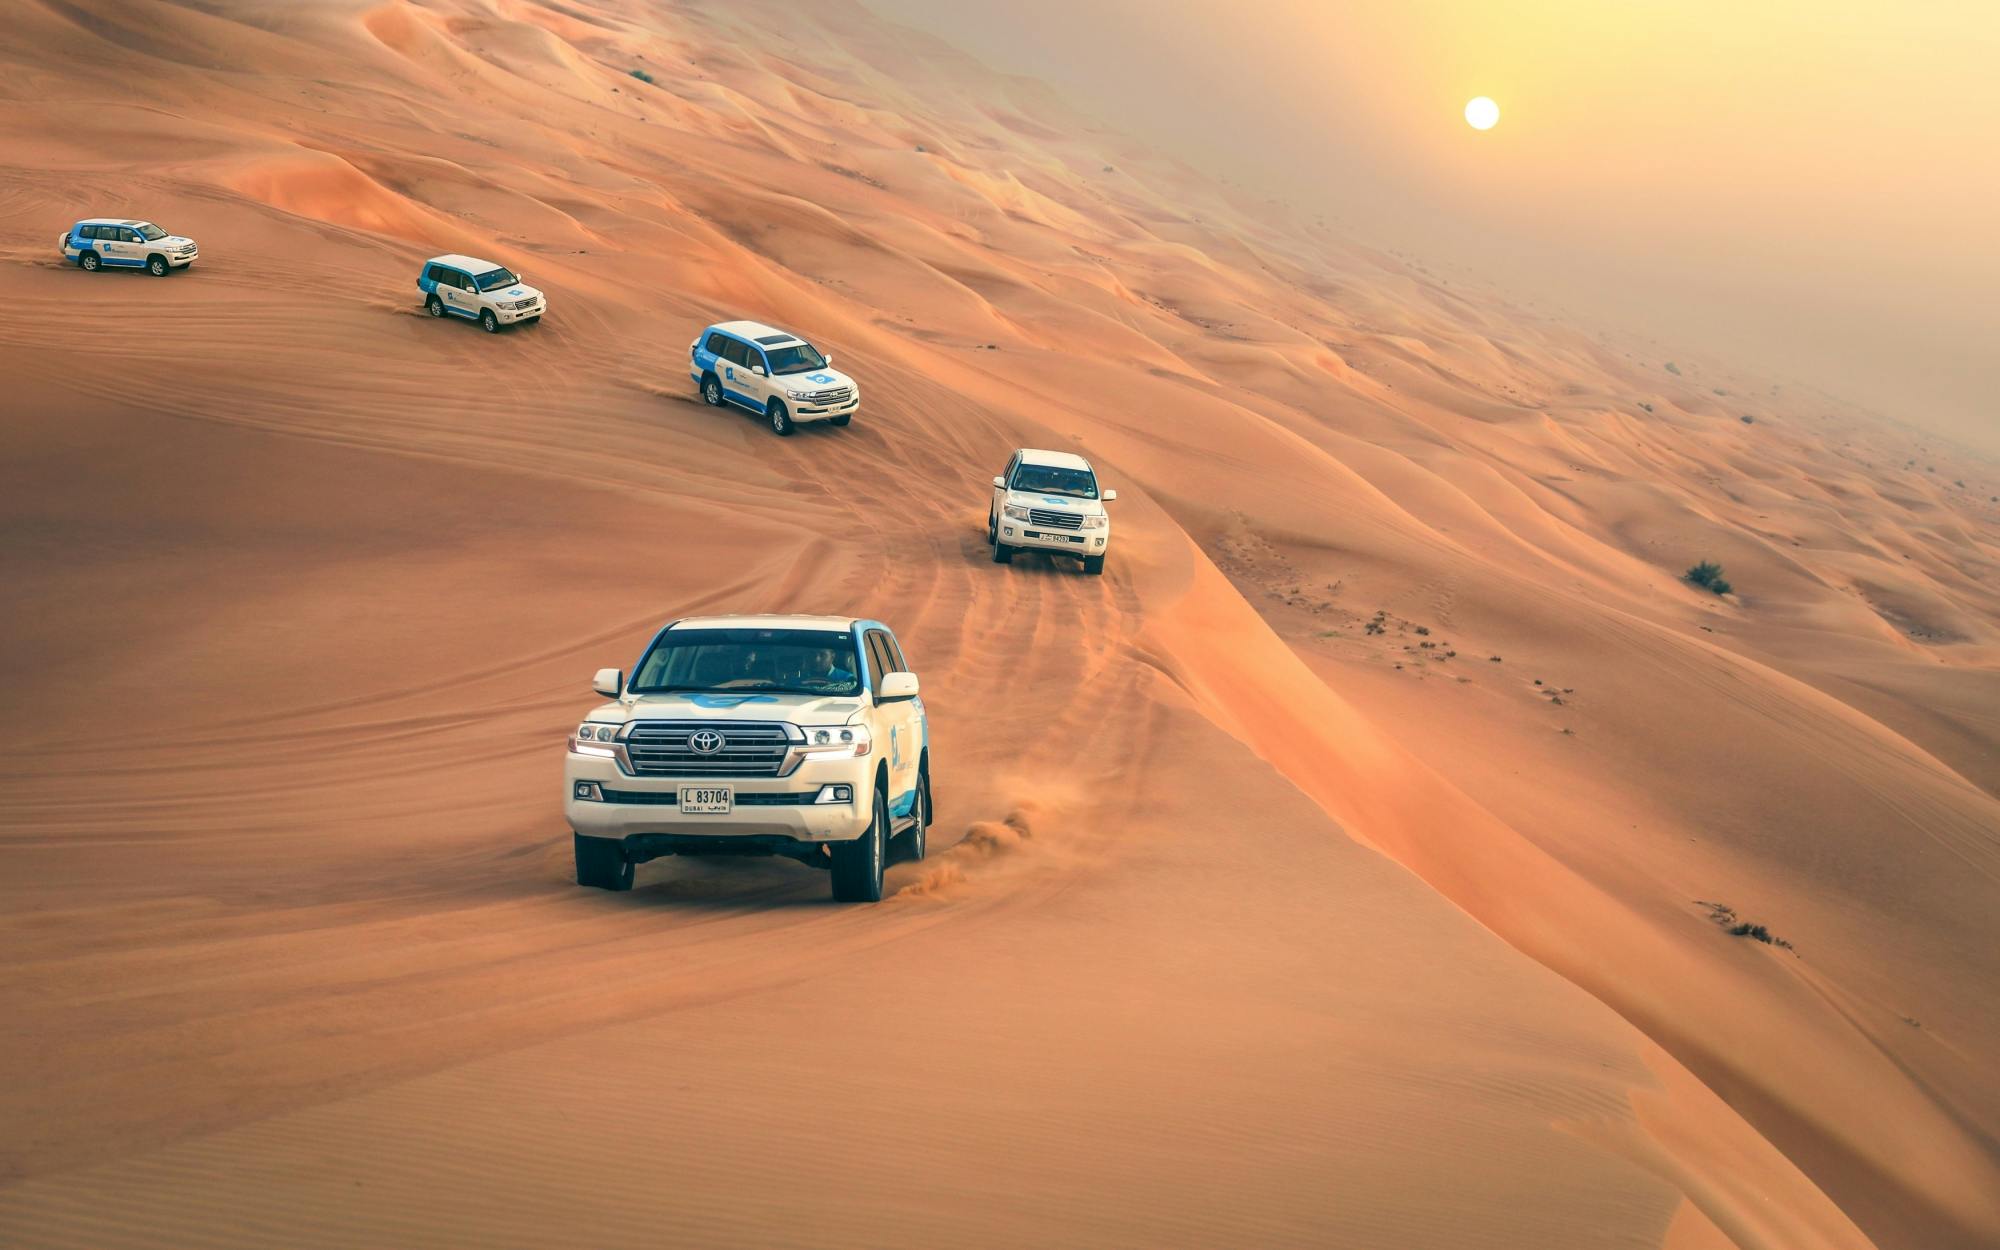 Dubai desert safari with dune bashing, sand boarding, BBQ dinner